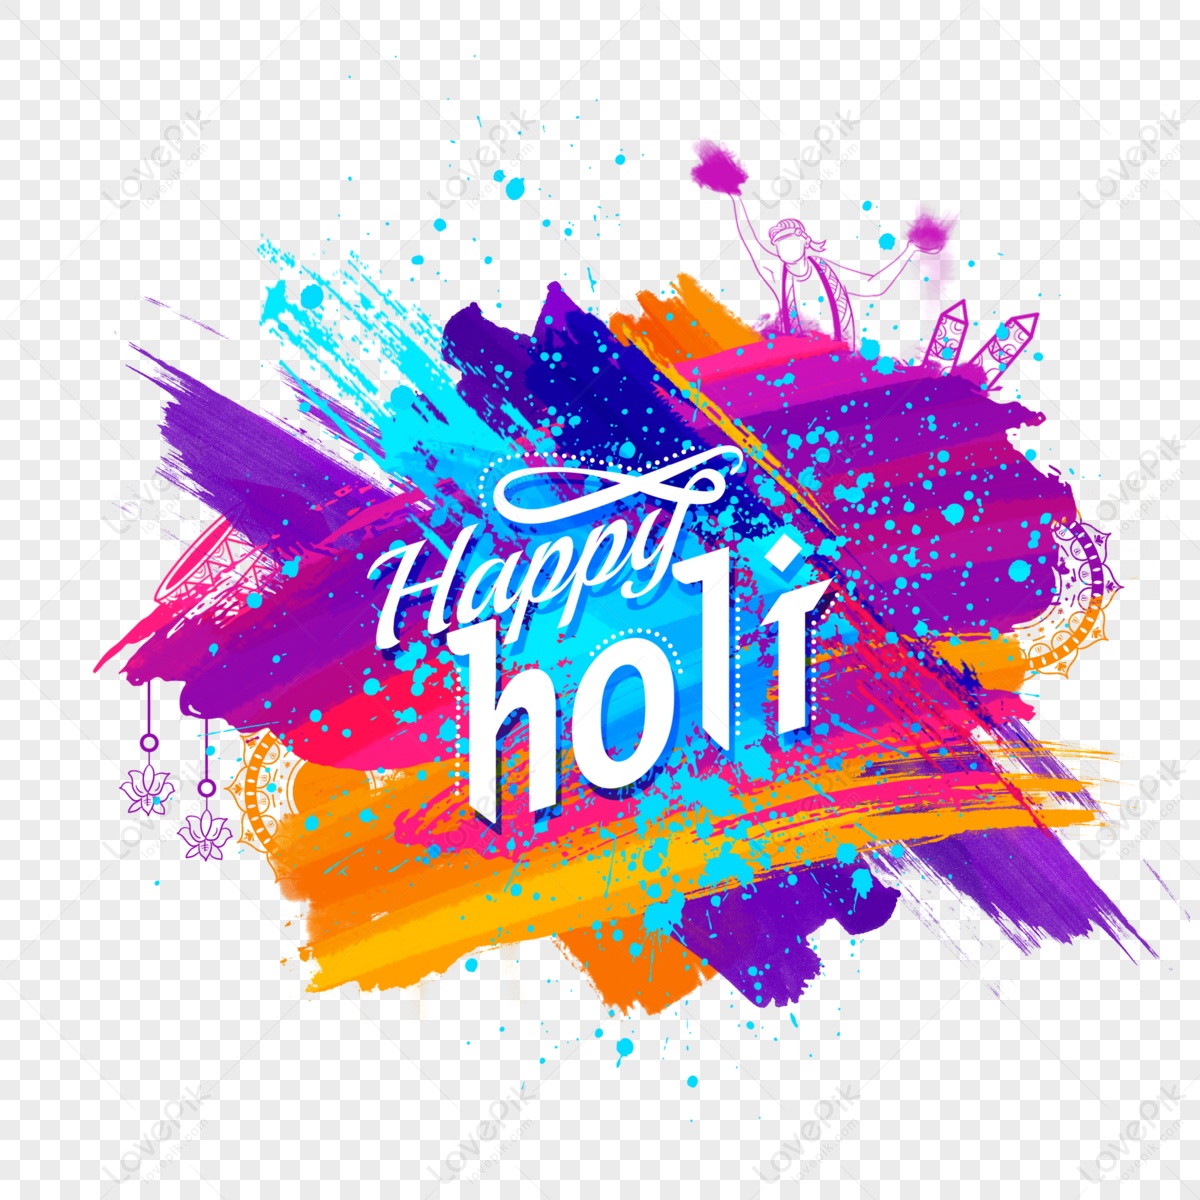 Happy holi text festival colours bright Royalty Free Vector